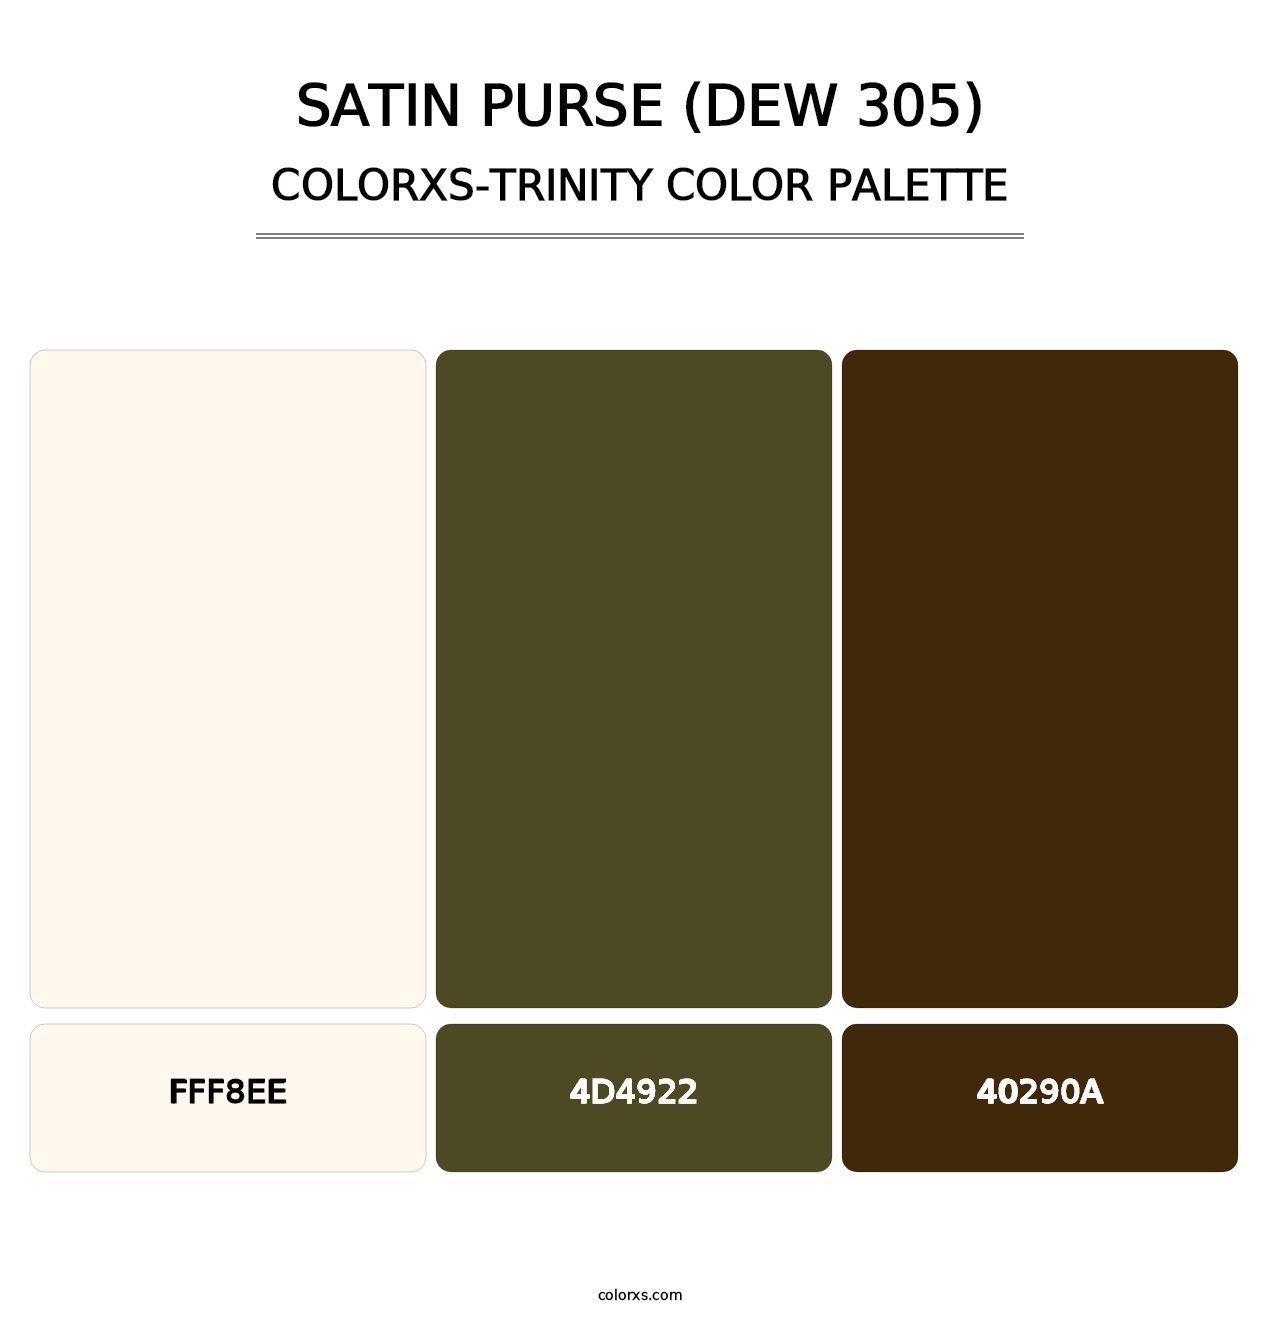 Satin Purse (DEW 305) - Colorxs Trinity Palette